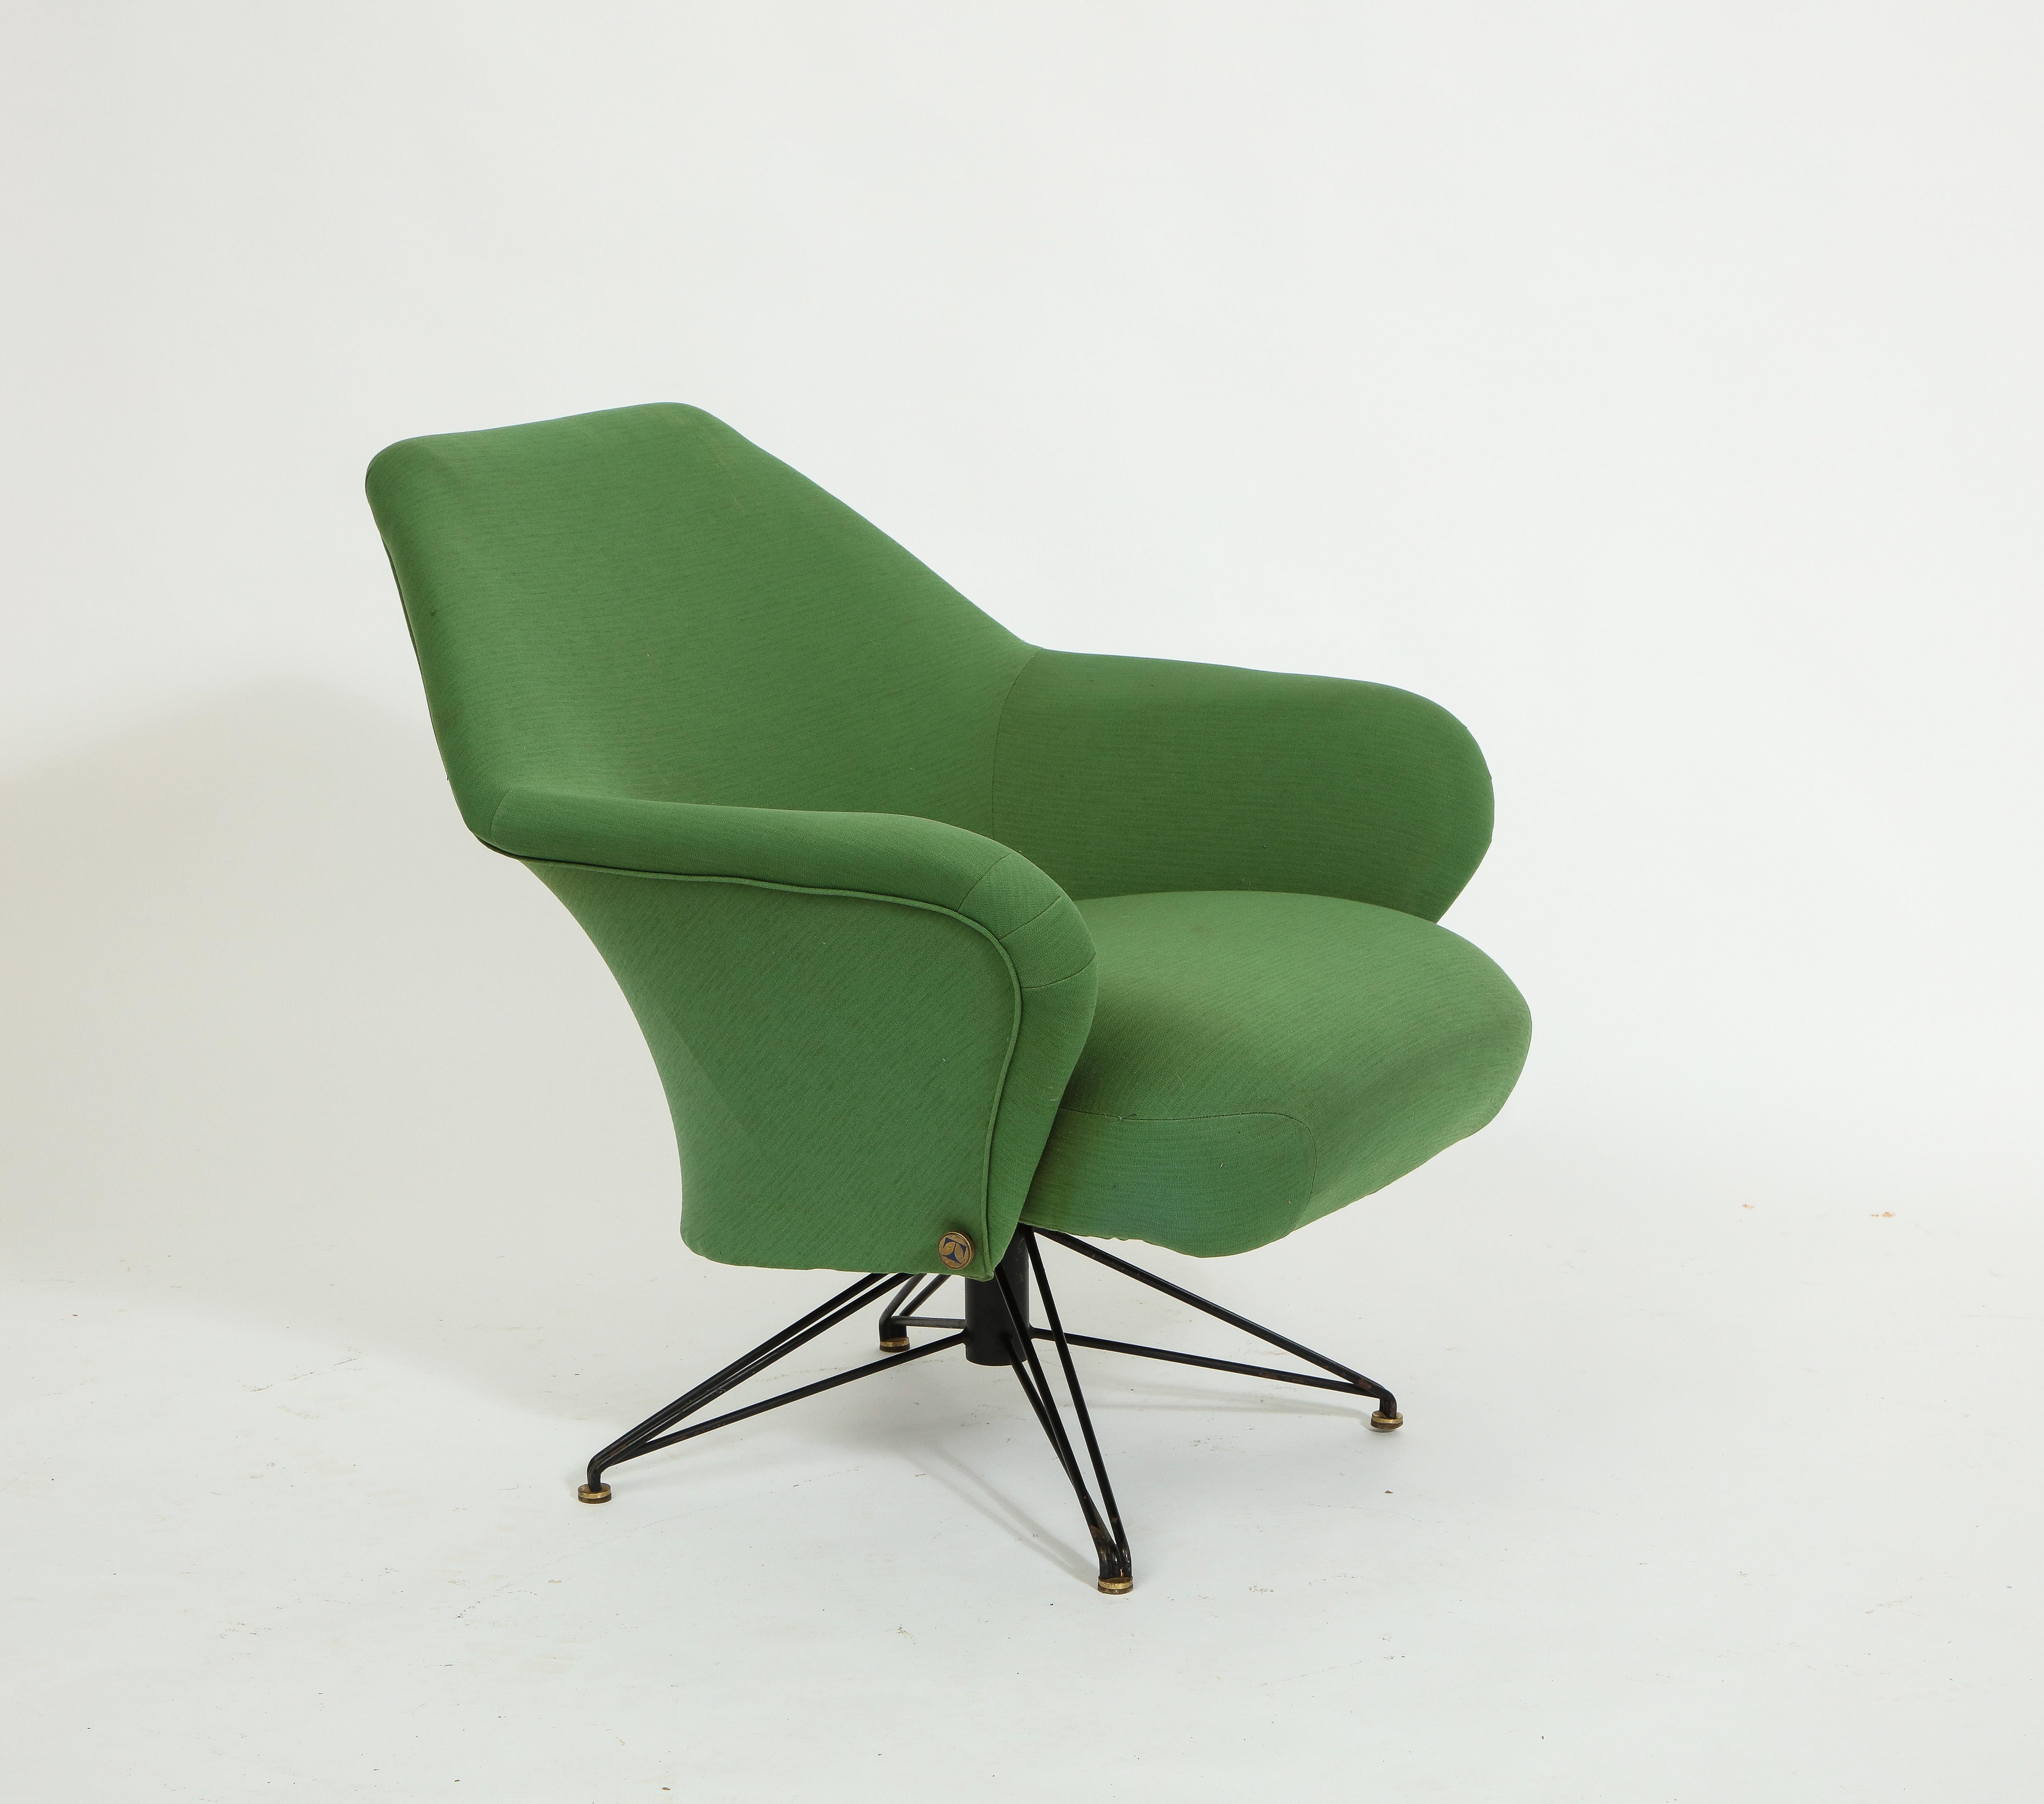 Osvaldo Borsani Pair of Green P32 Chairs for Tecno, Italy 1950s For Sale 1